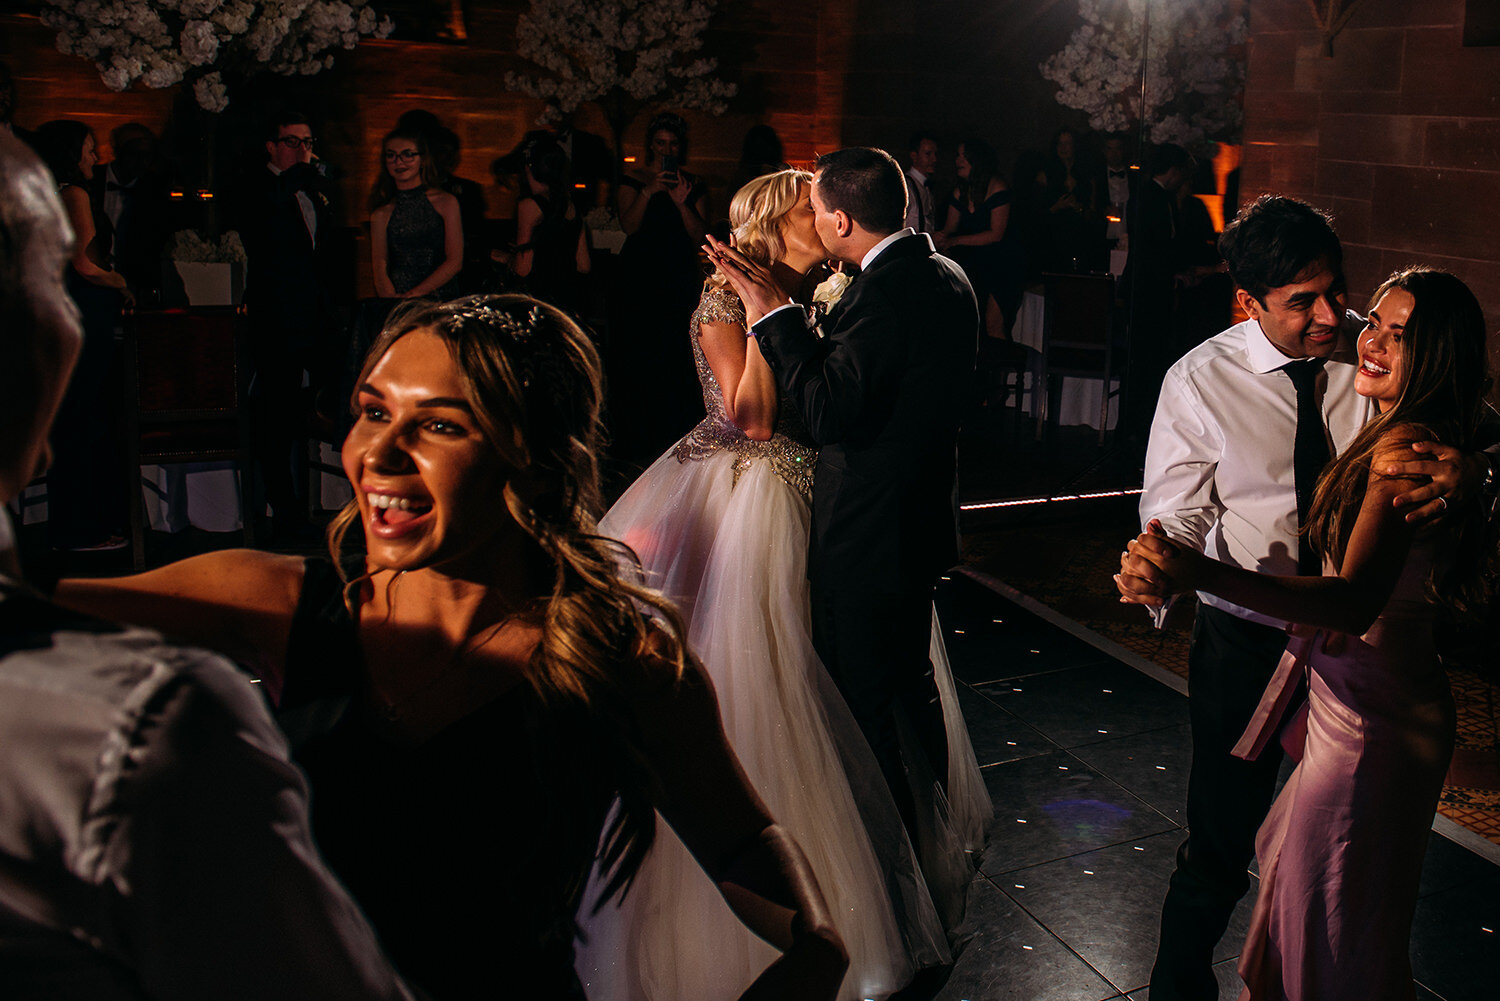  Bride and groom kiss on the dance floor 